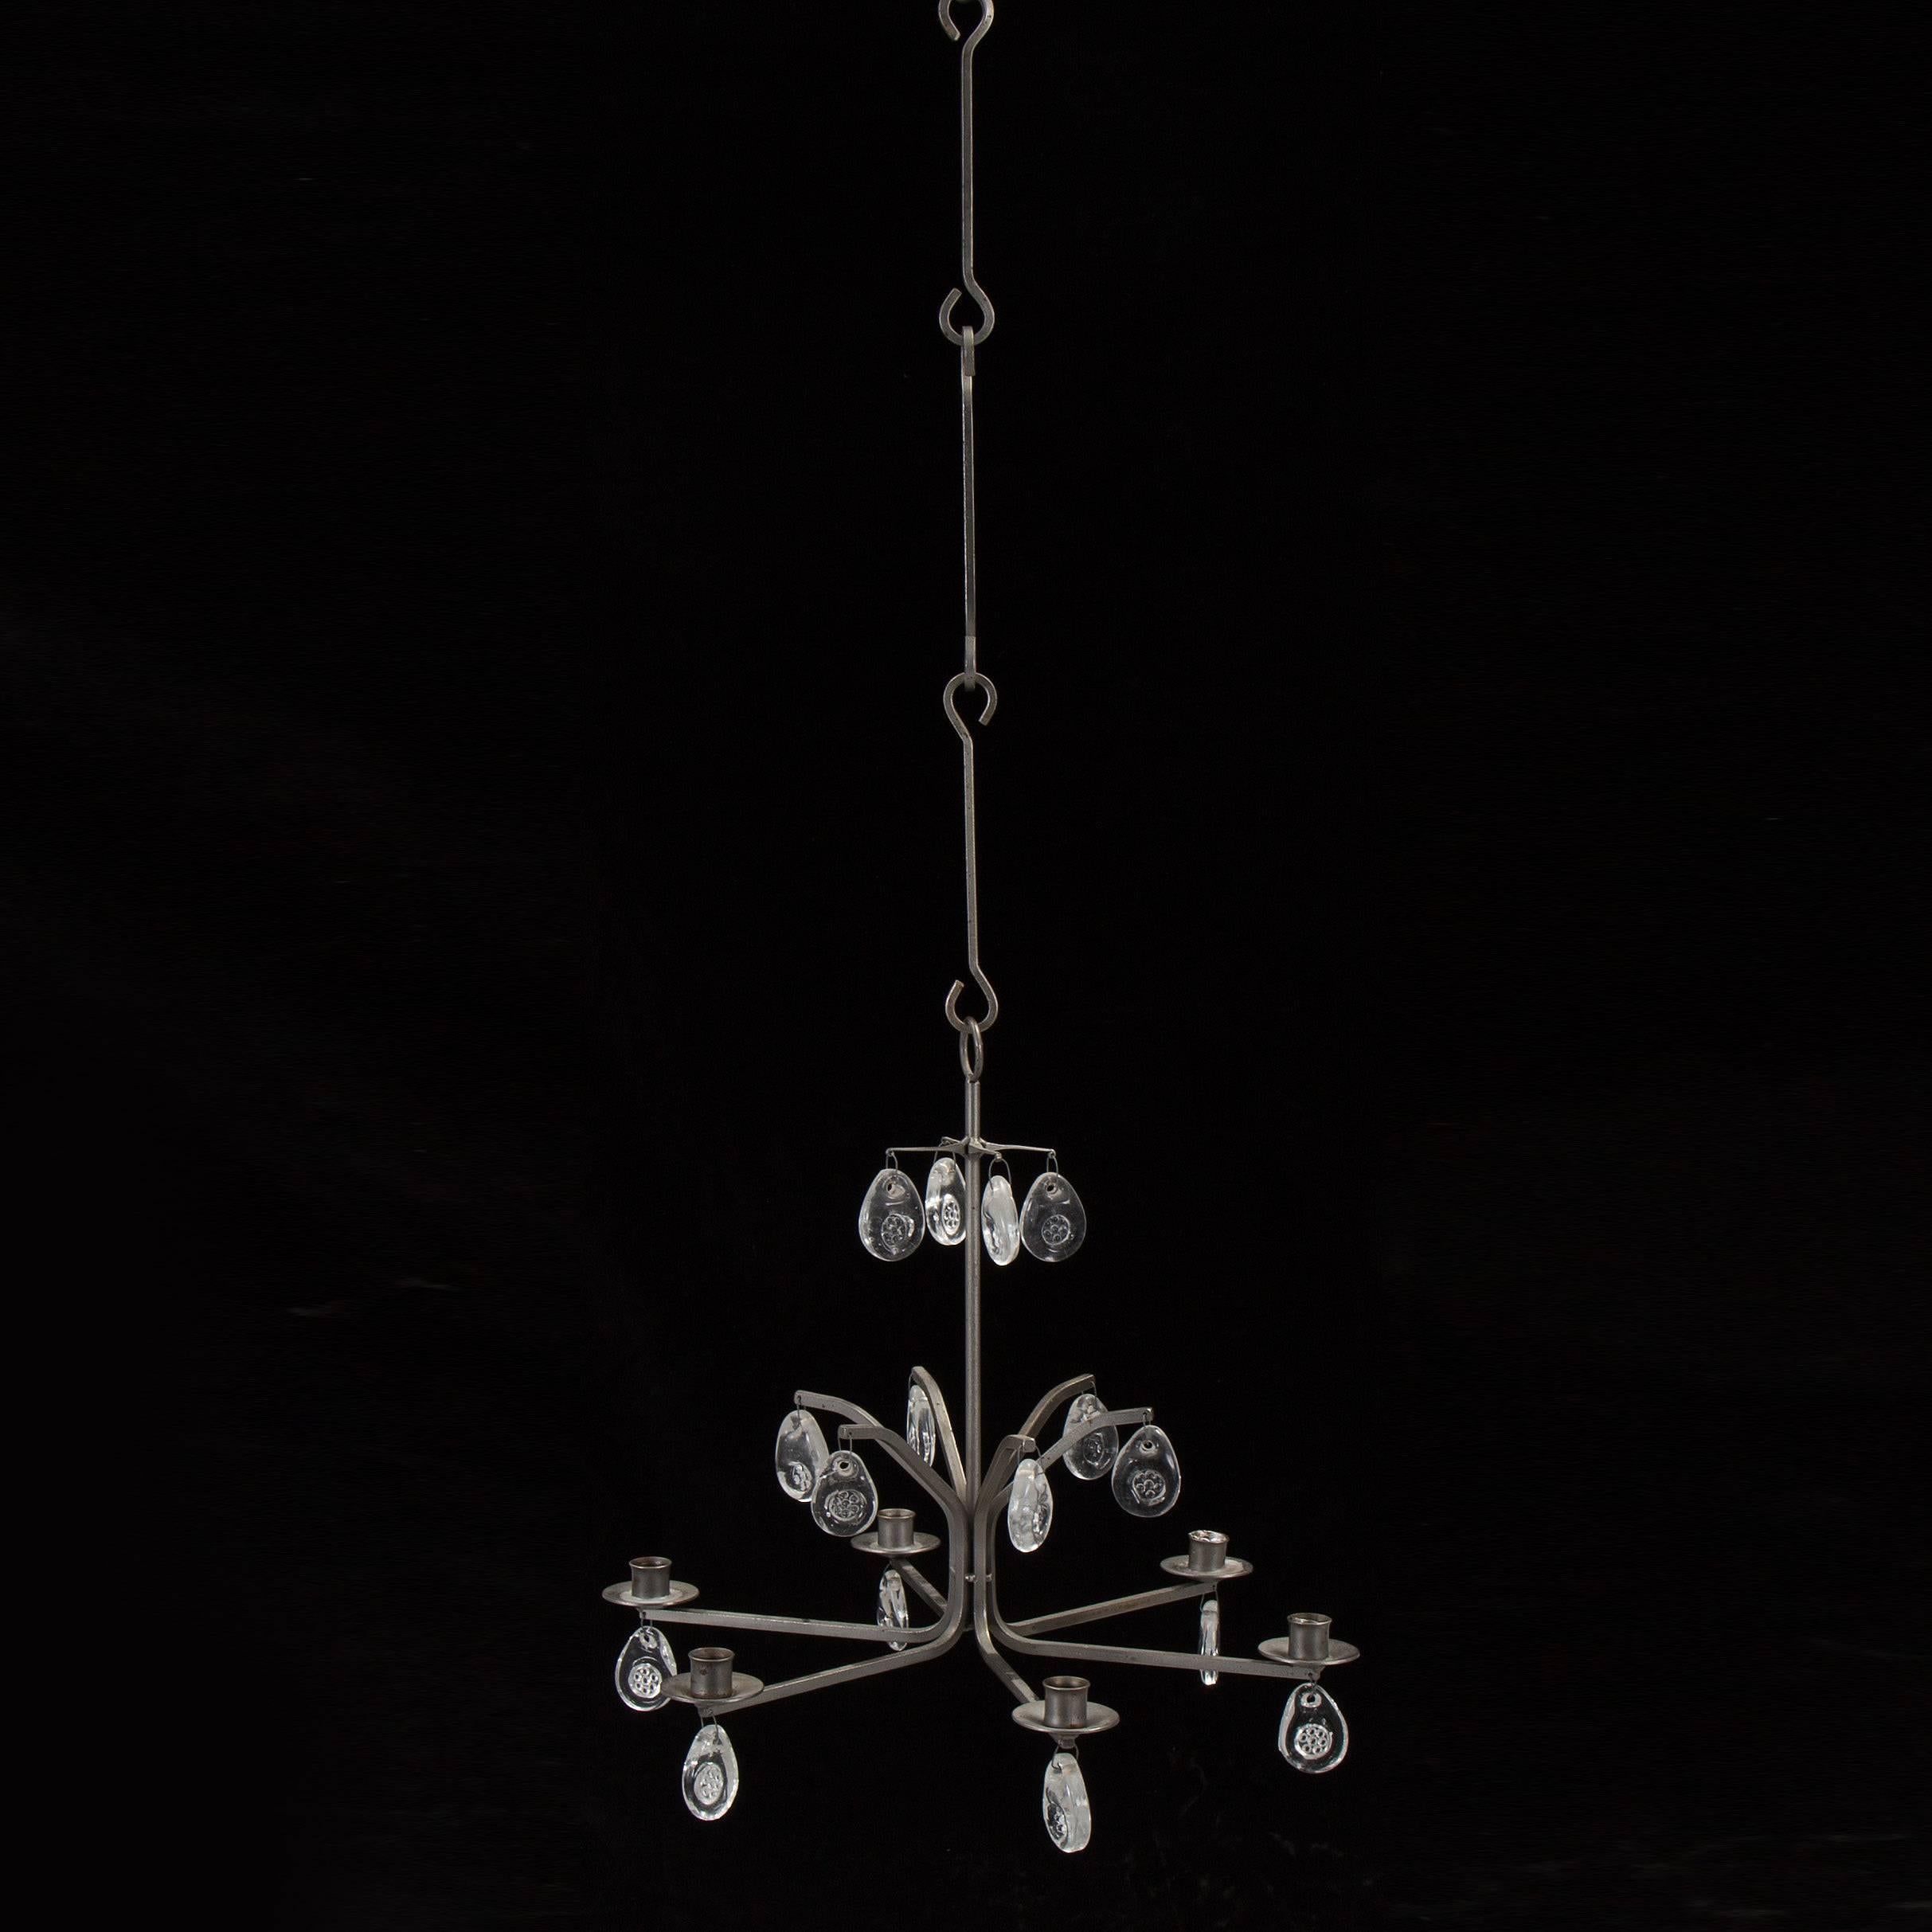 Erik Höglund lit chandelier; Sweden, circa 1950;
Produced by Boda Smide;
Wrought iron metal; glass.